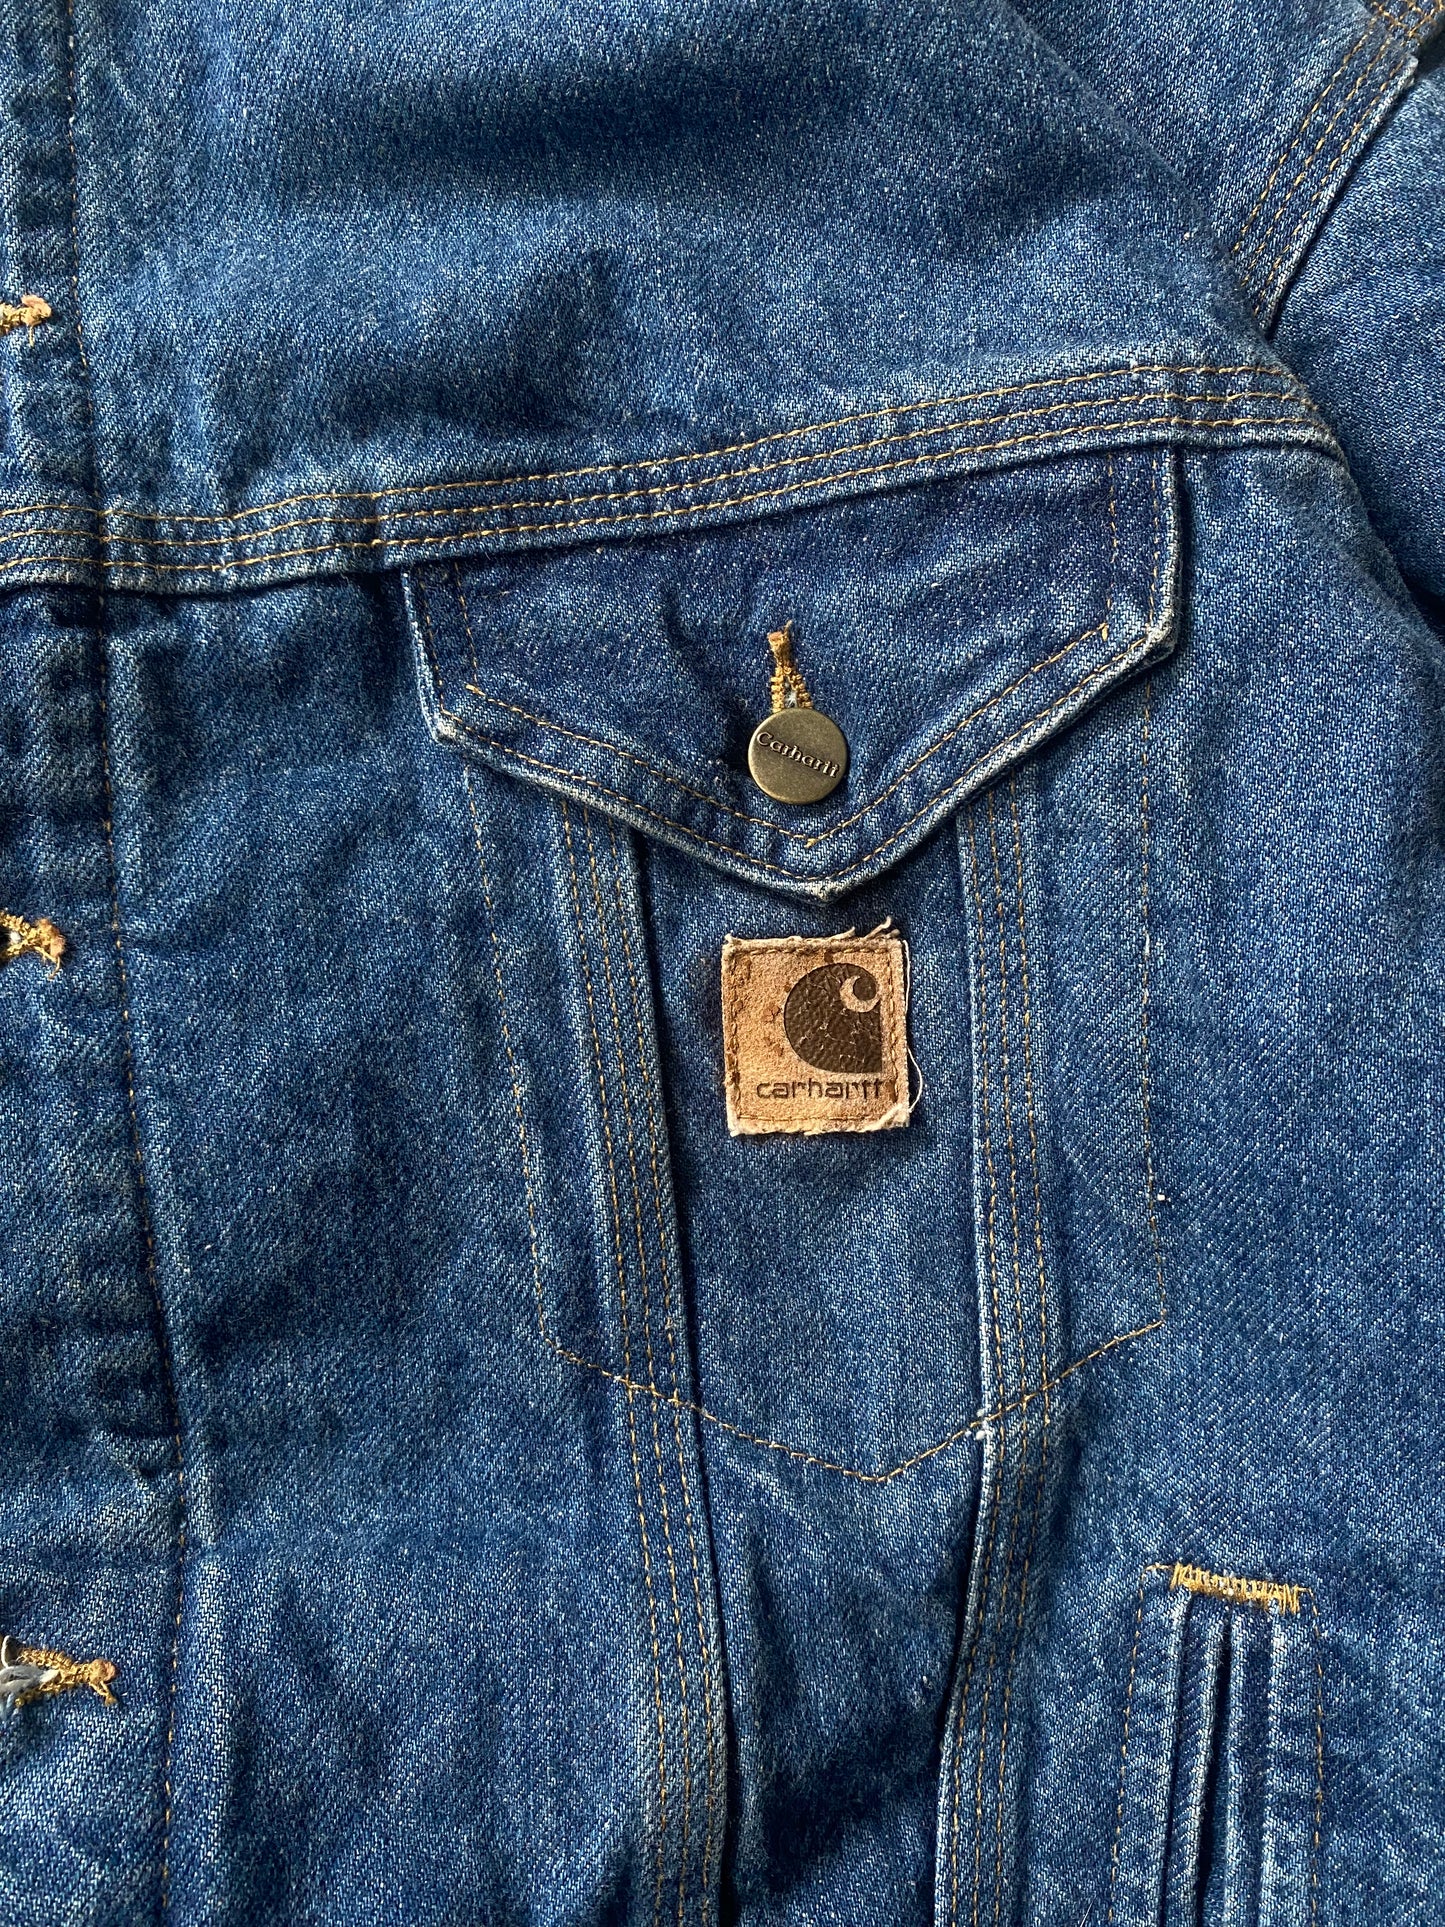 1990s Vintage Carhartt Denim Jacket